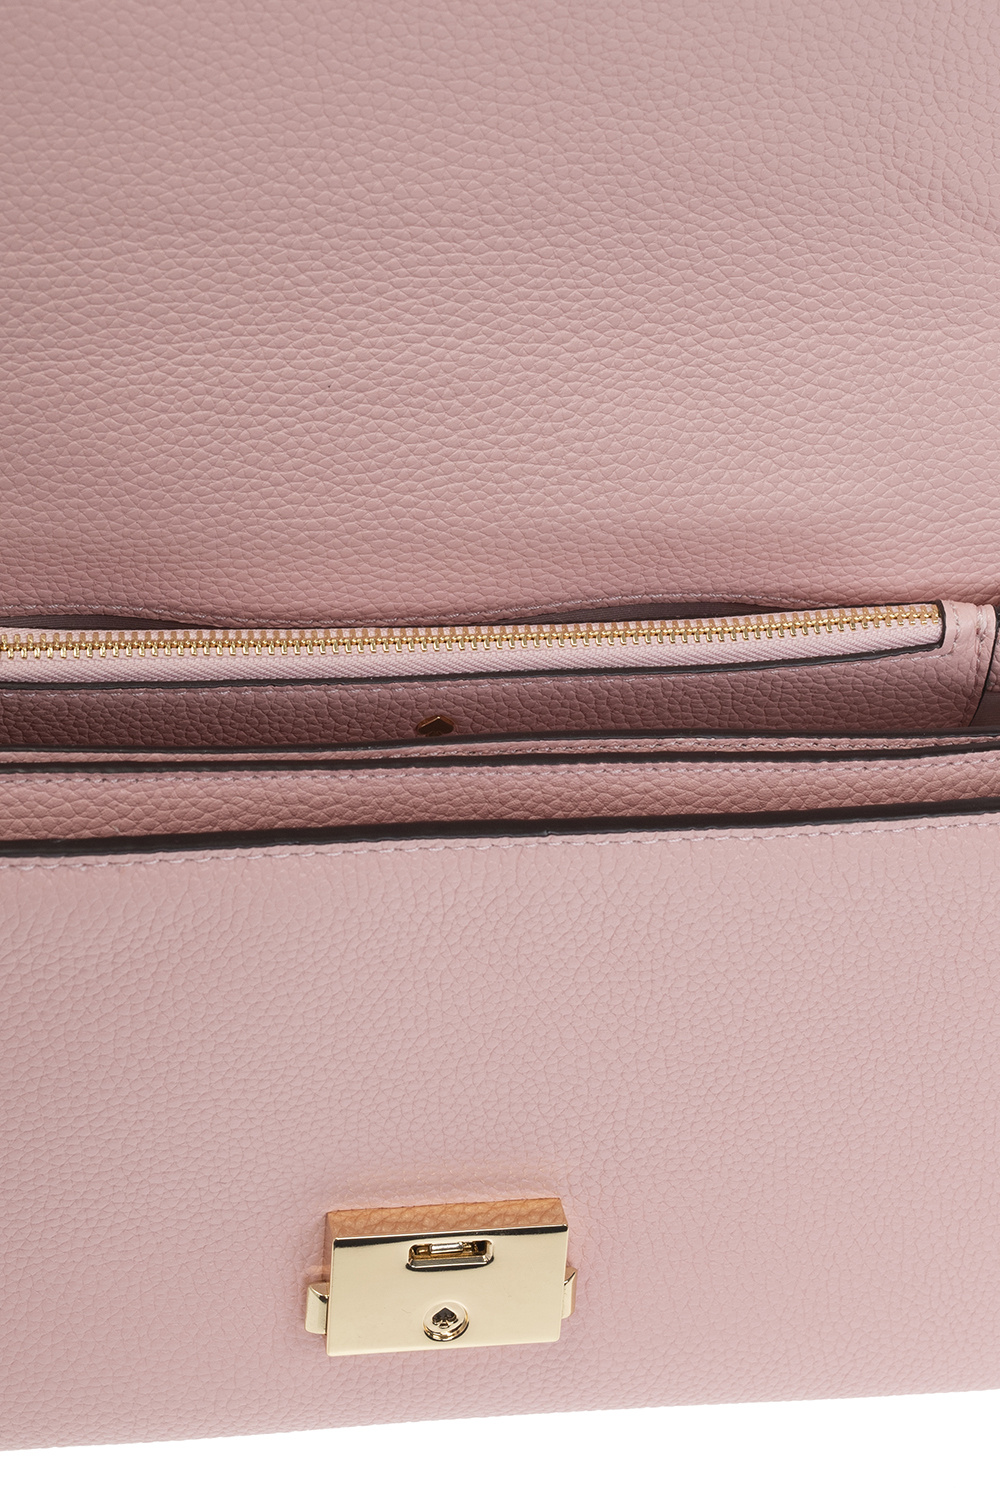 Kate Spade New York Women's Carlyle Medium Shoulder Handbag - Pink 